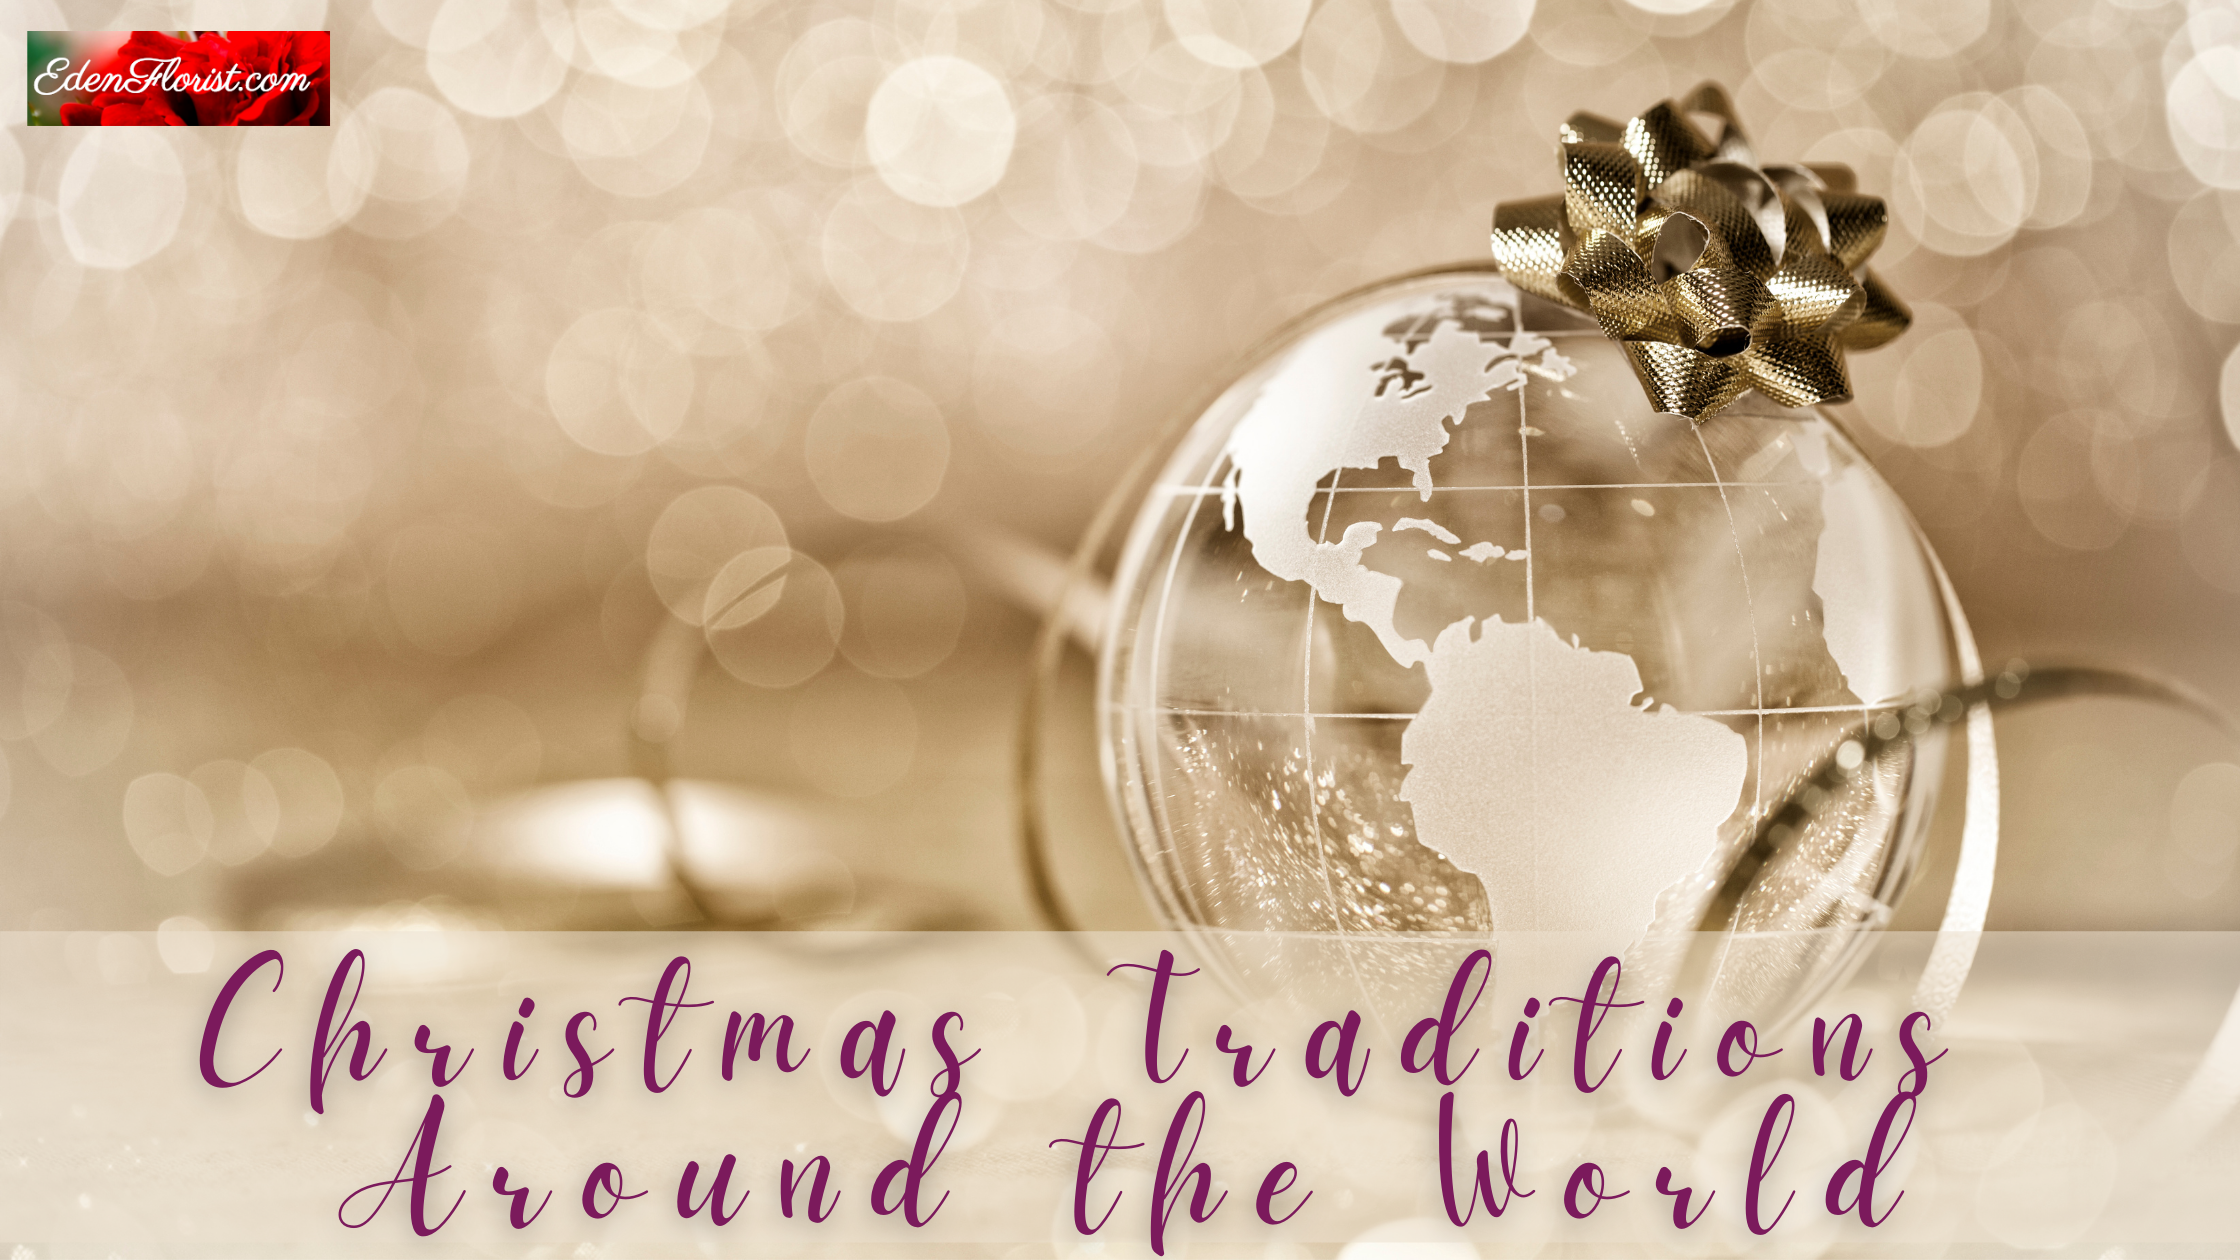 "Christmas Traditions Around the World"